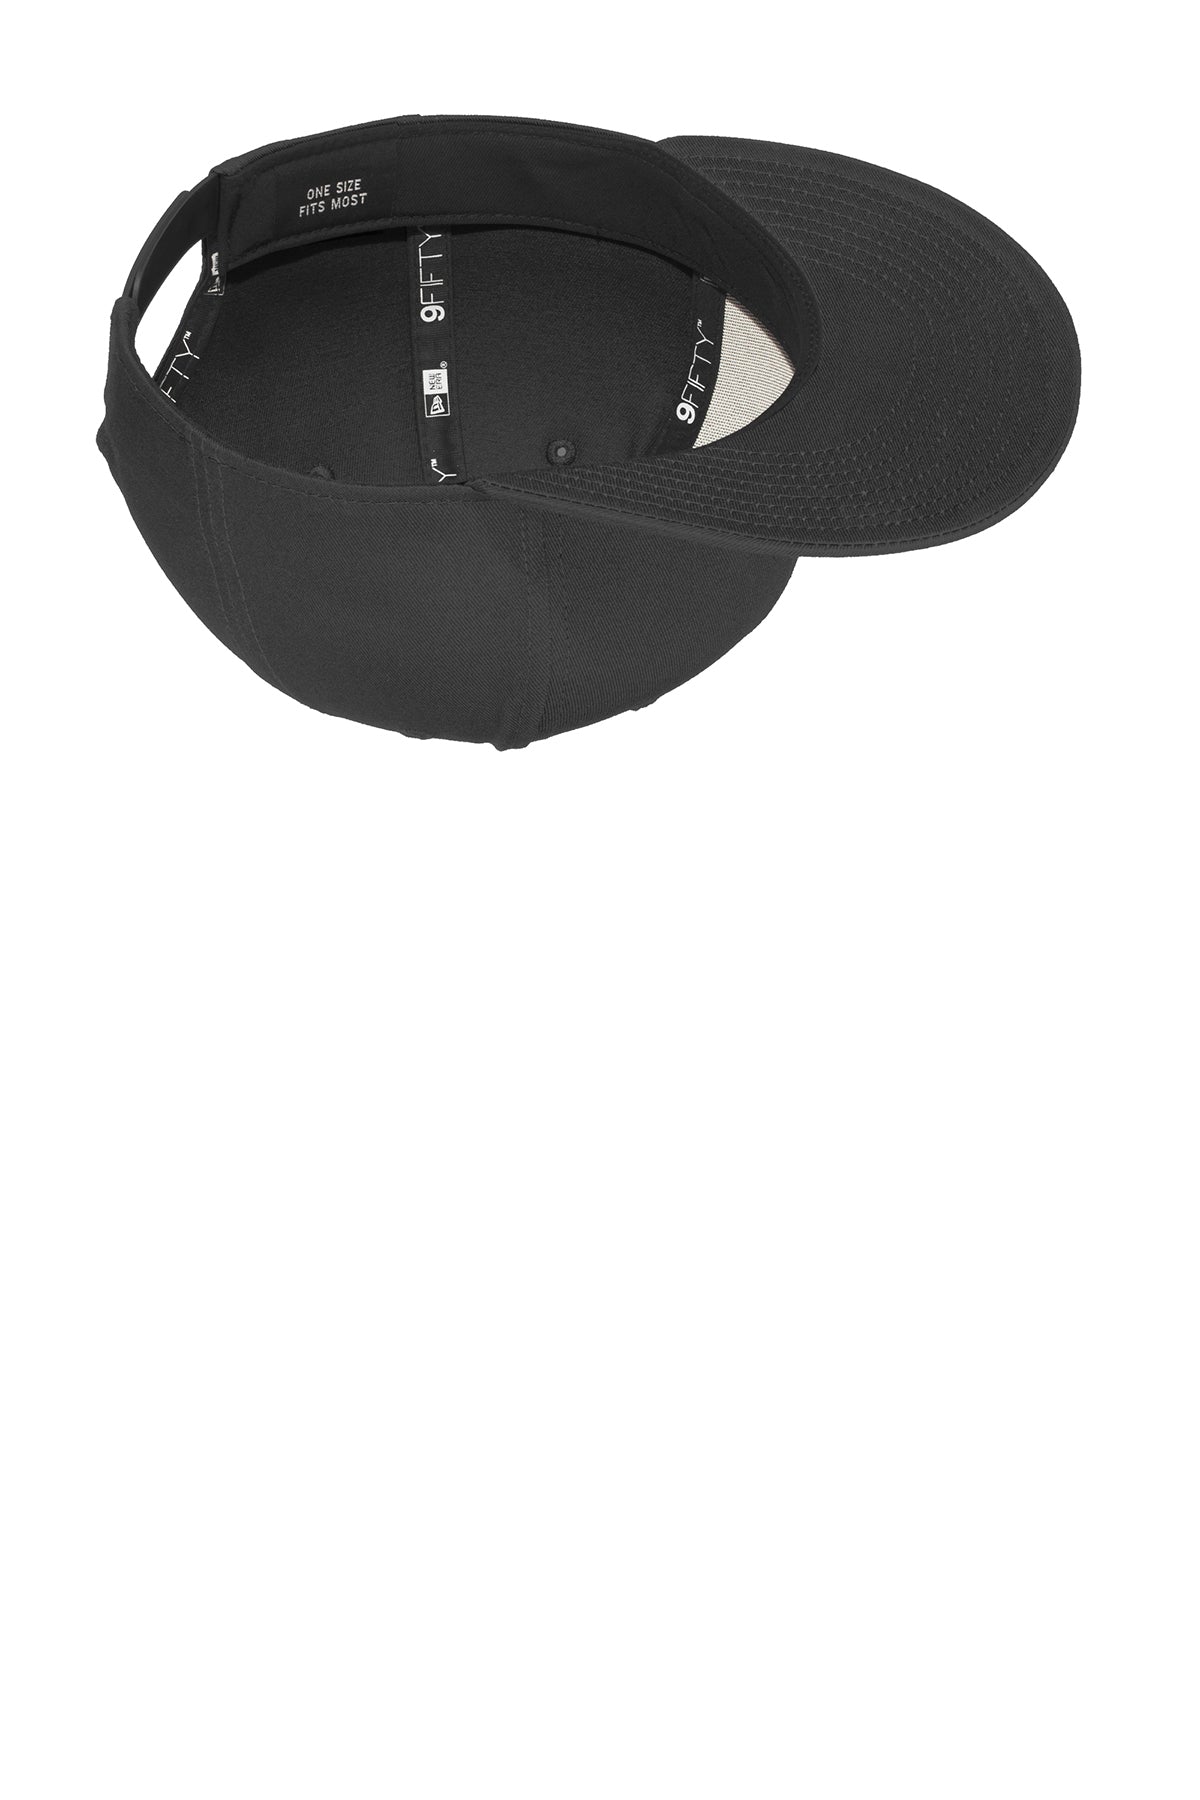 New Era Flat Bill Snapback Customized Caps, Black